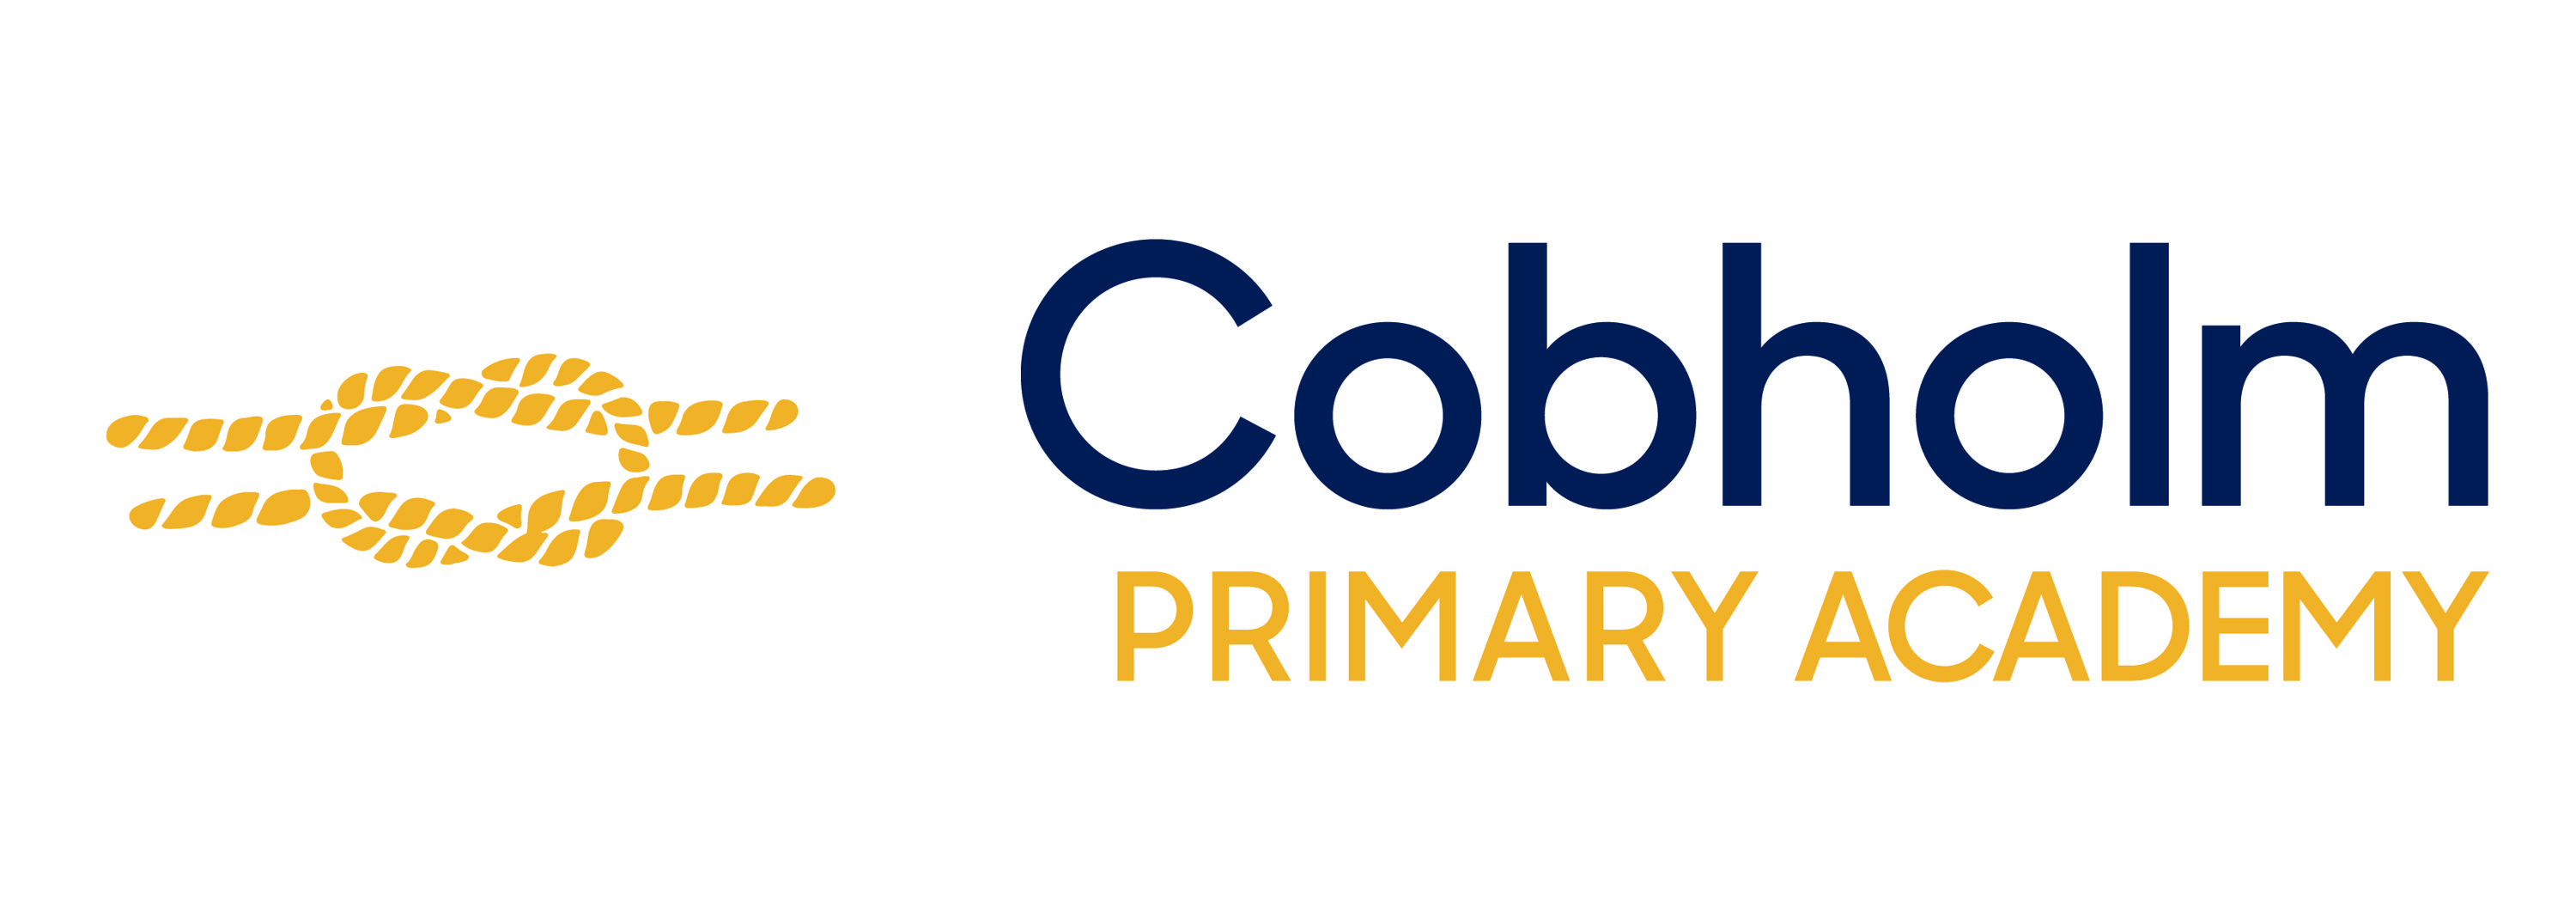 Cobholm Primary Academy